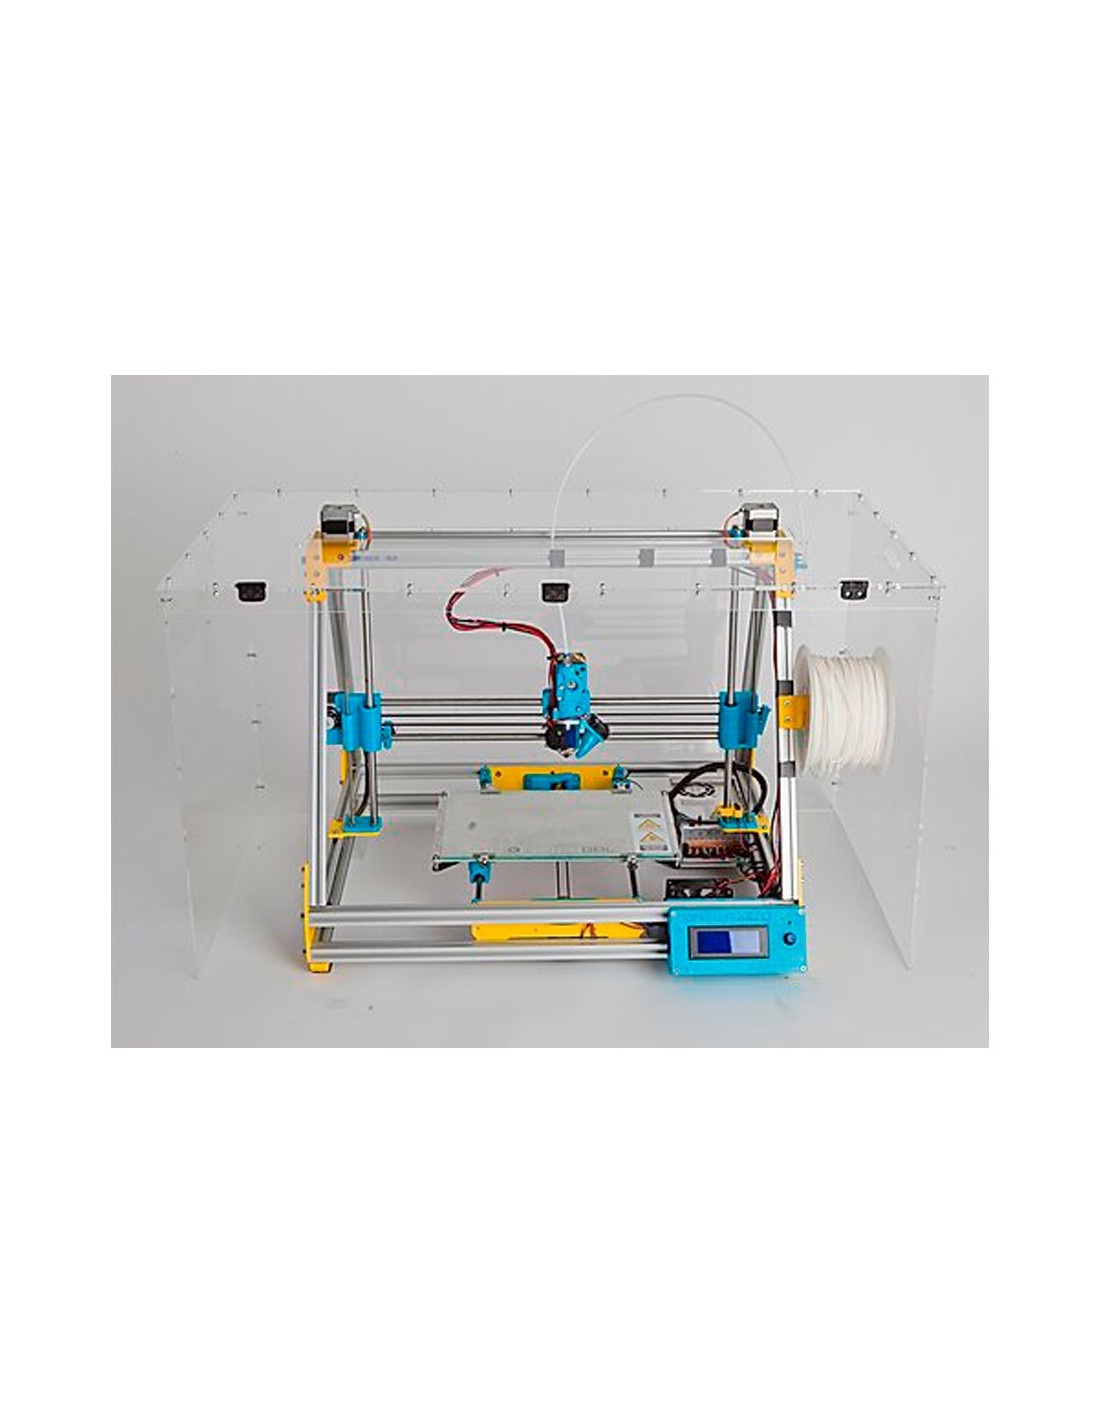 Impresora 3D Mendel Max XL V5